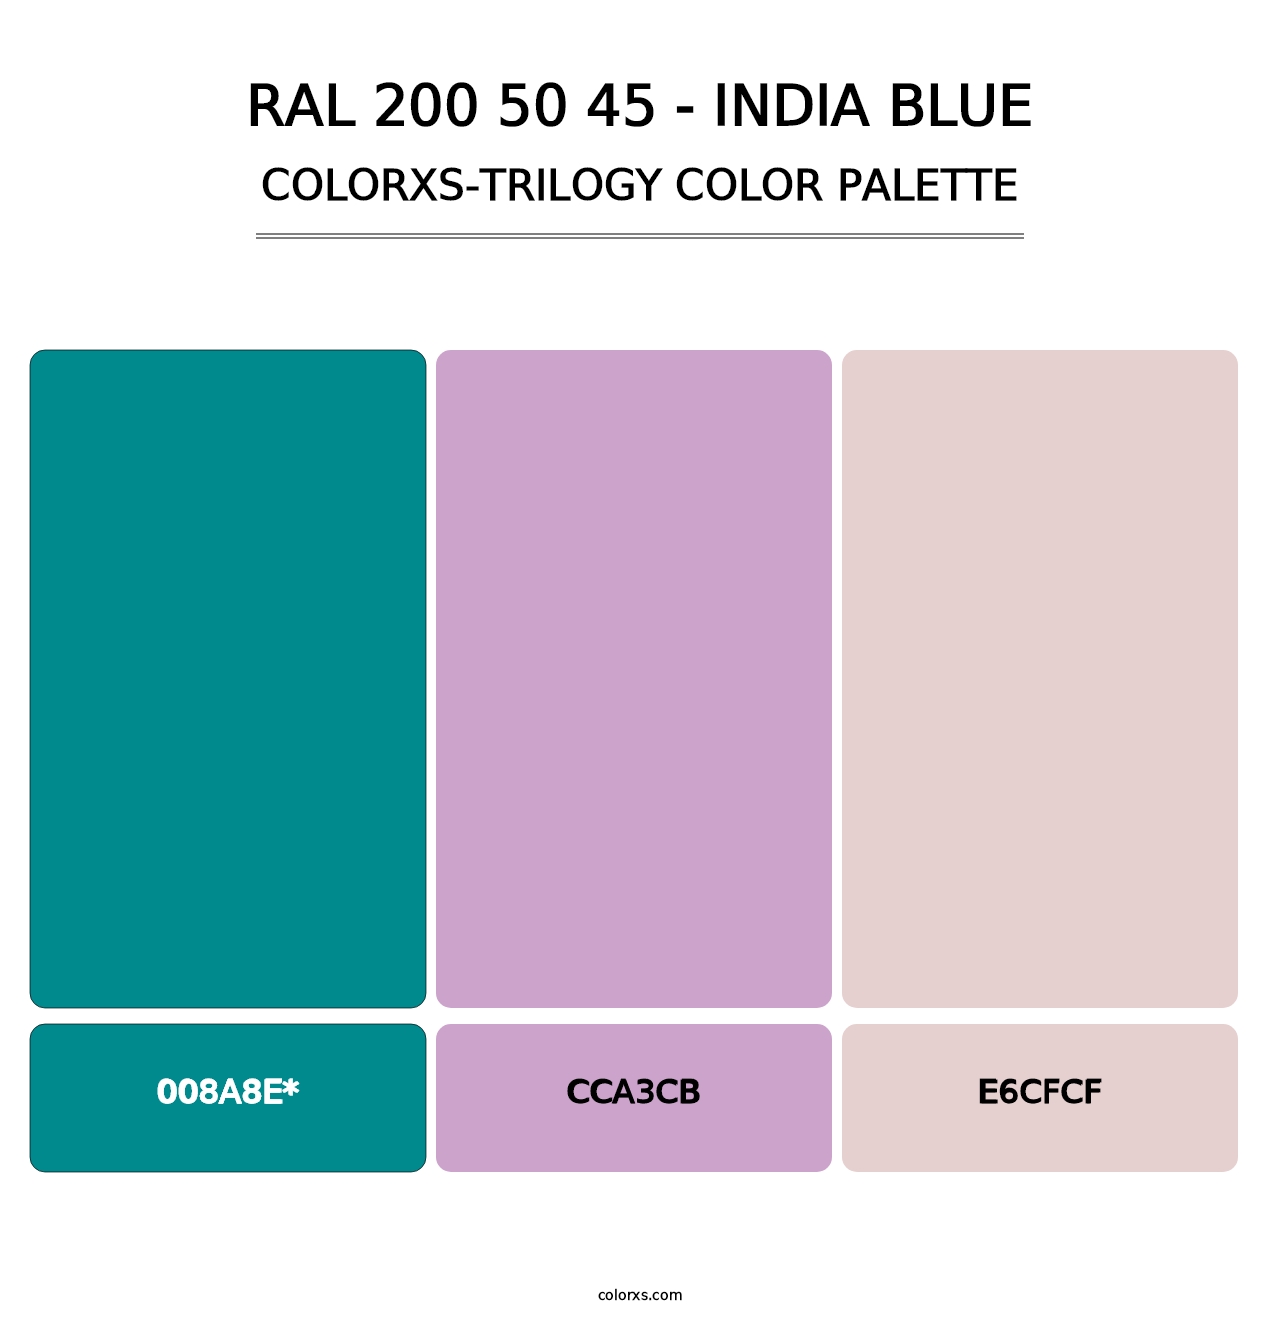 RAL 200 50 45 - India Blue - Colorxs Trilogy Palette